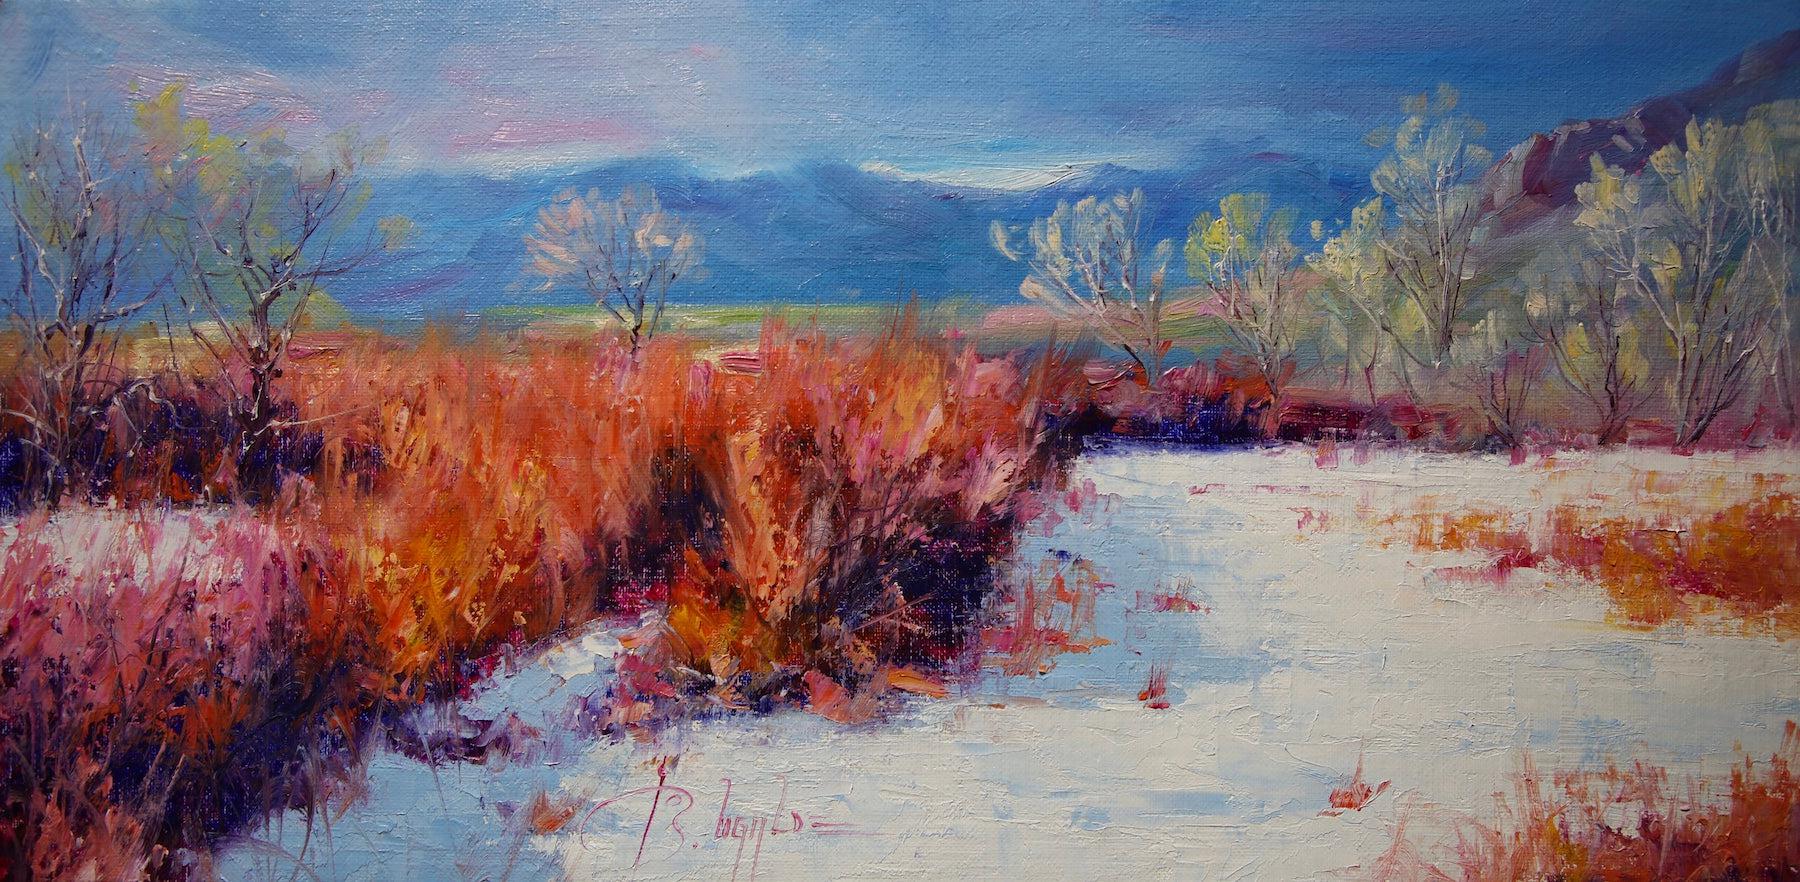 Winter Over Taos-Painting-Roberto Ugalde-Sorrel Sky Gallery